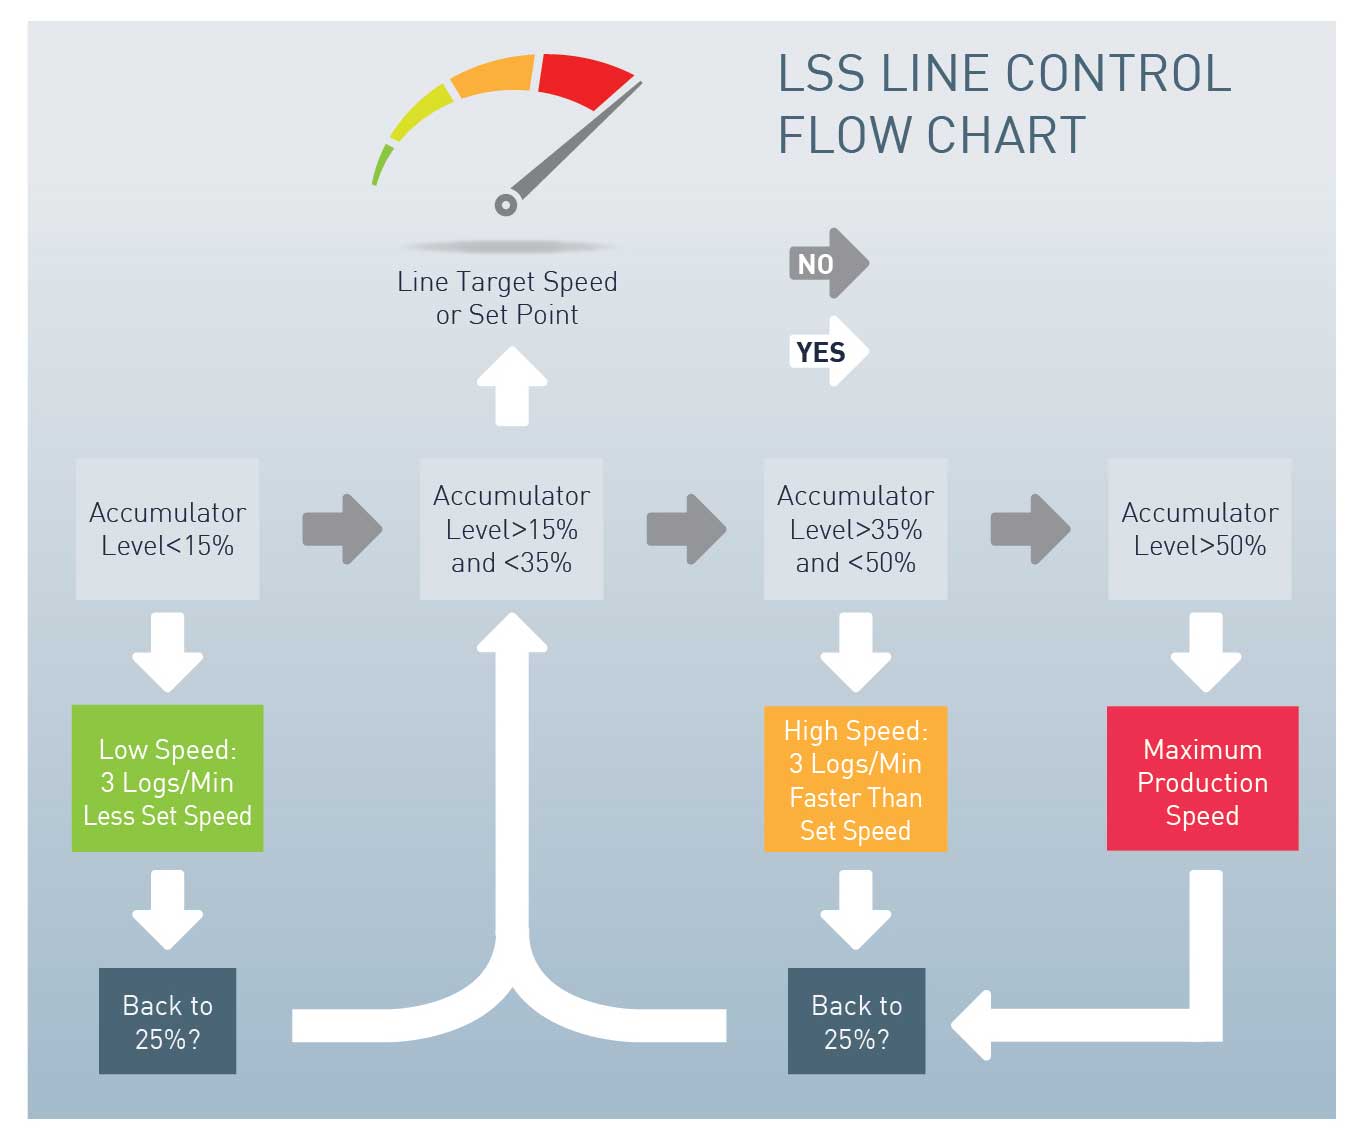 LSS line control flow chart